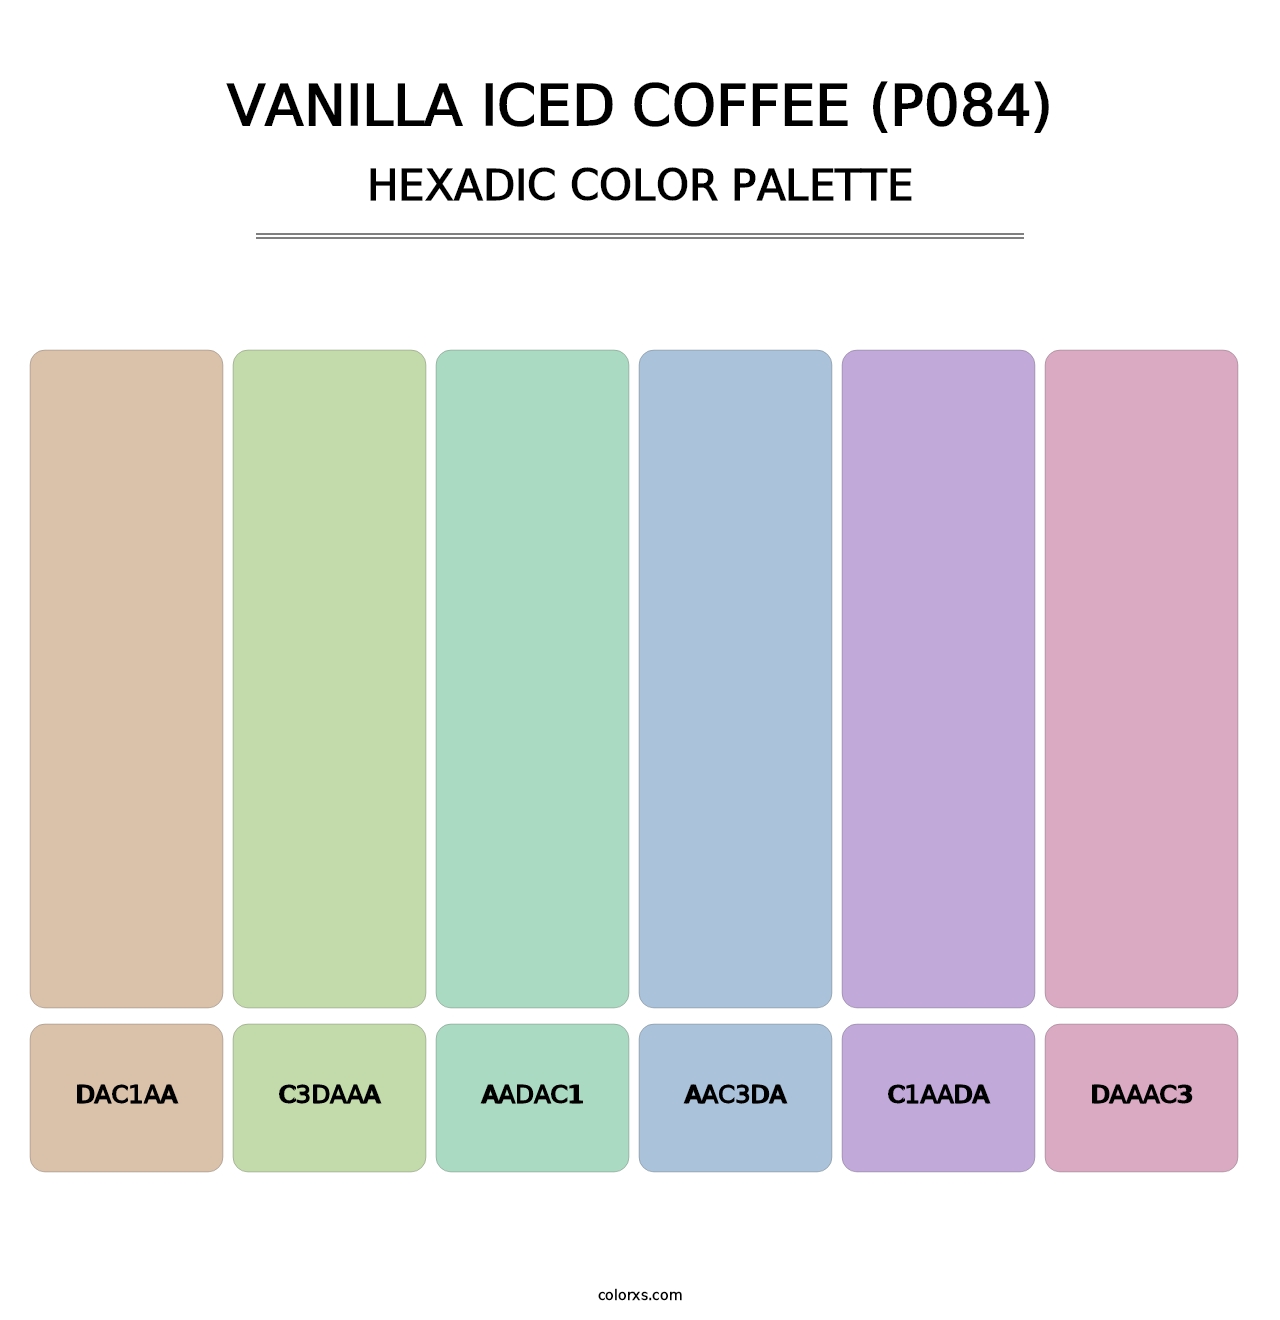 Vanilla Iced Coffee (P084) - Hexadic Color Palette